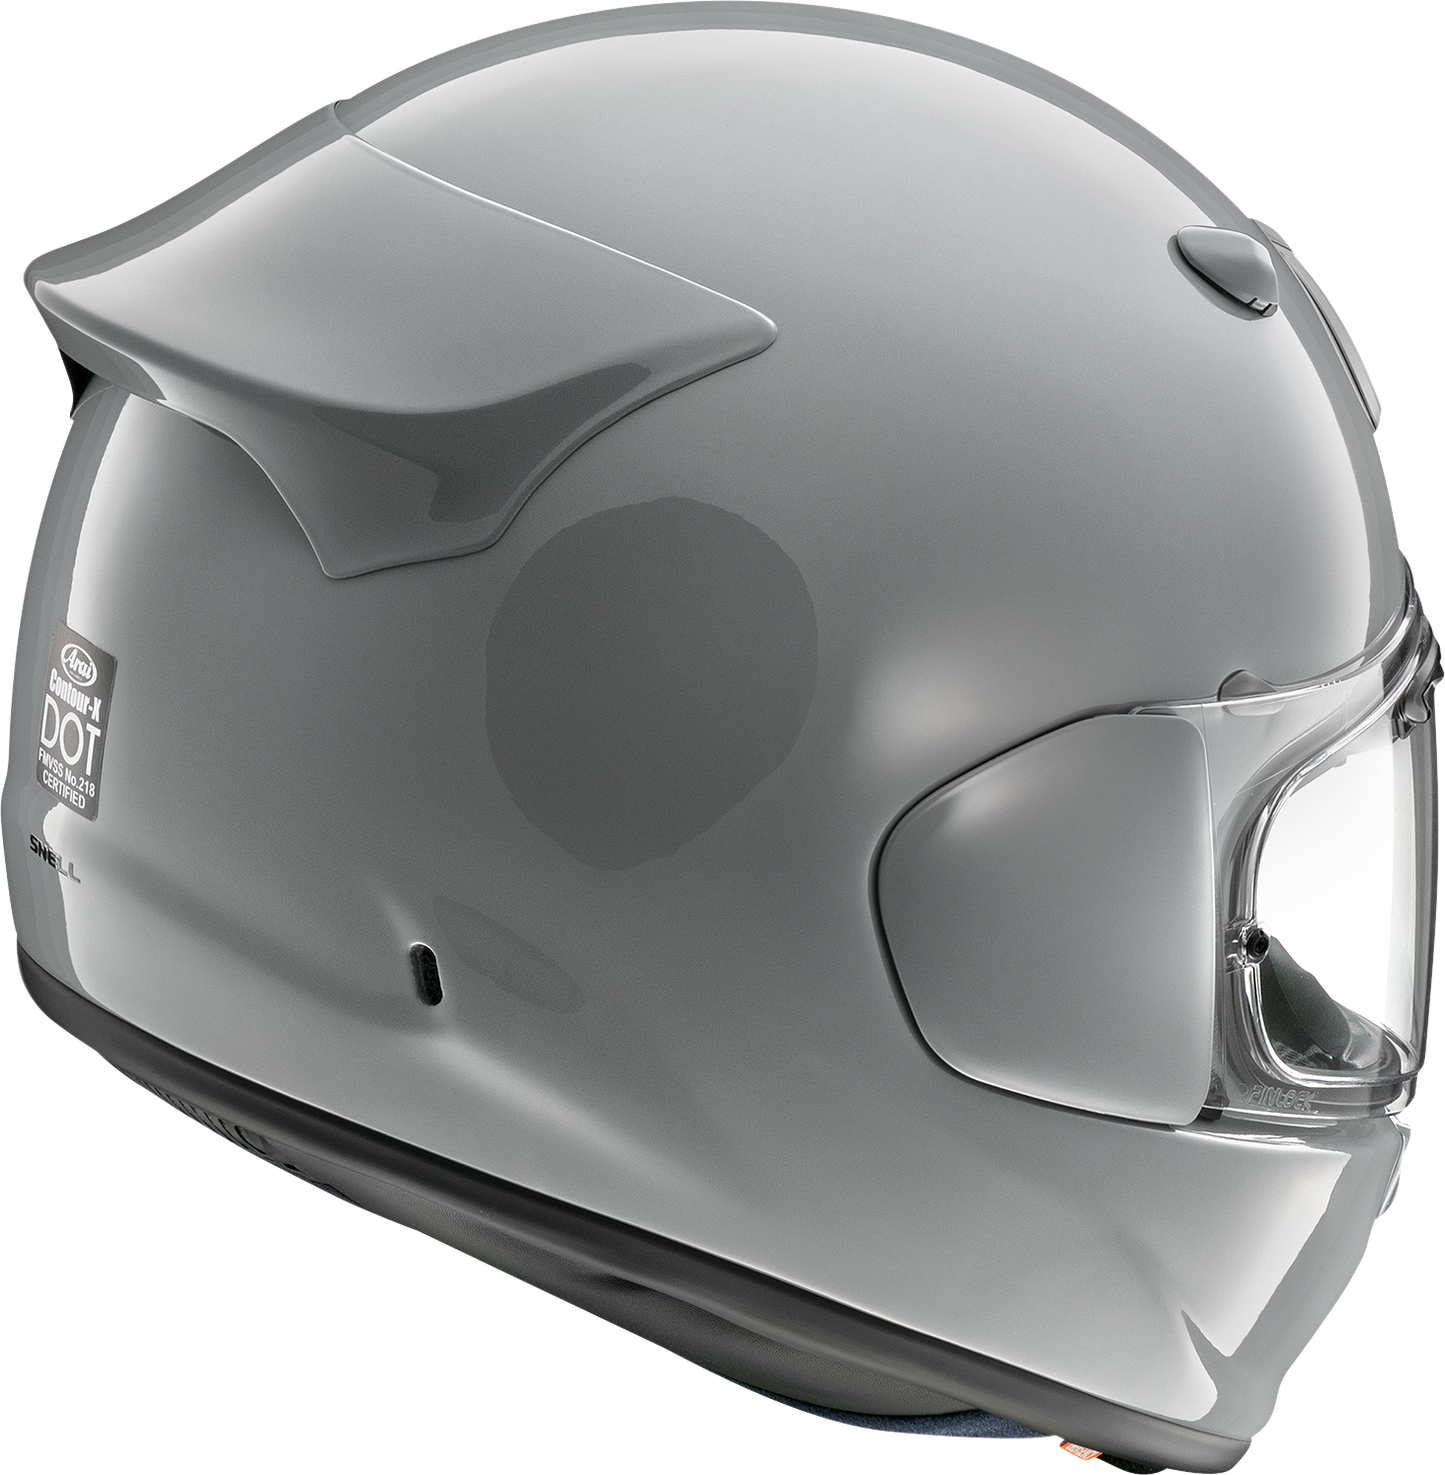 ARAI HELMETS Contour-X Helmet - Solid - Light Gray - XS 0101-16049